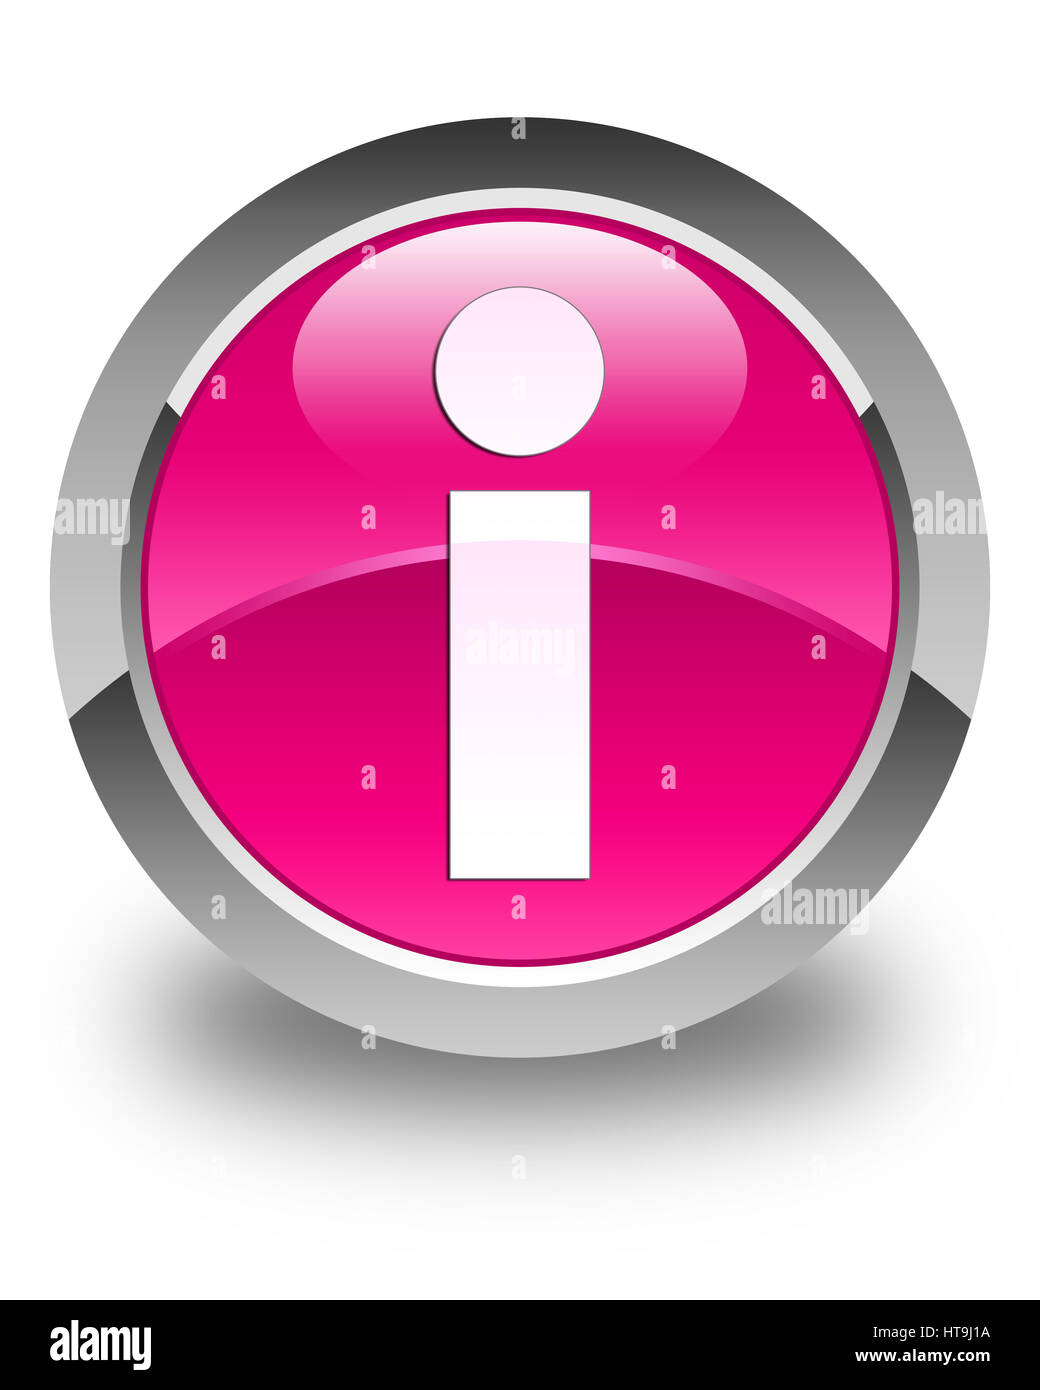 L'icône Infos isolé sur bouton rond rose brillant abstract illustration Banque D'Images